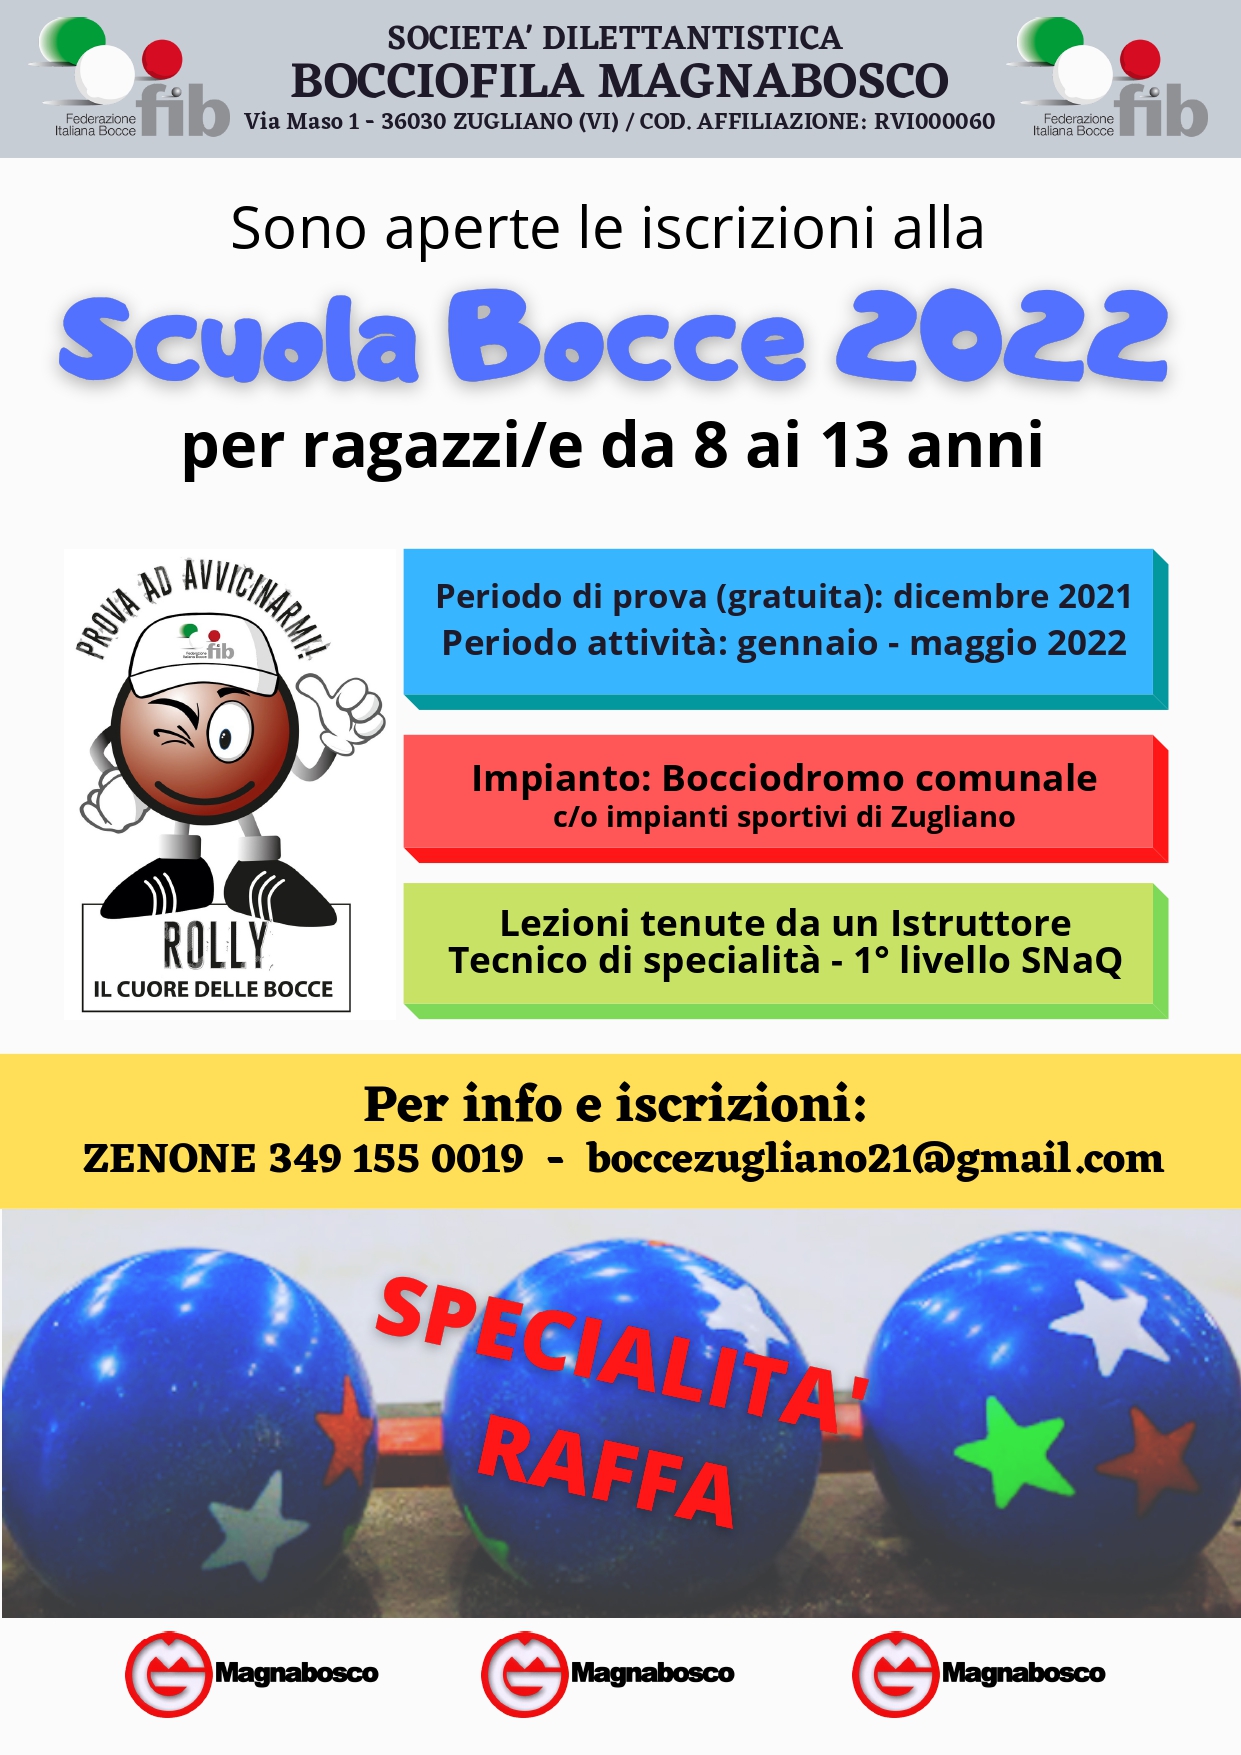 corso_bocce_magnabosco_page-0001.jpg